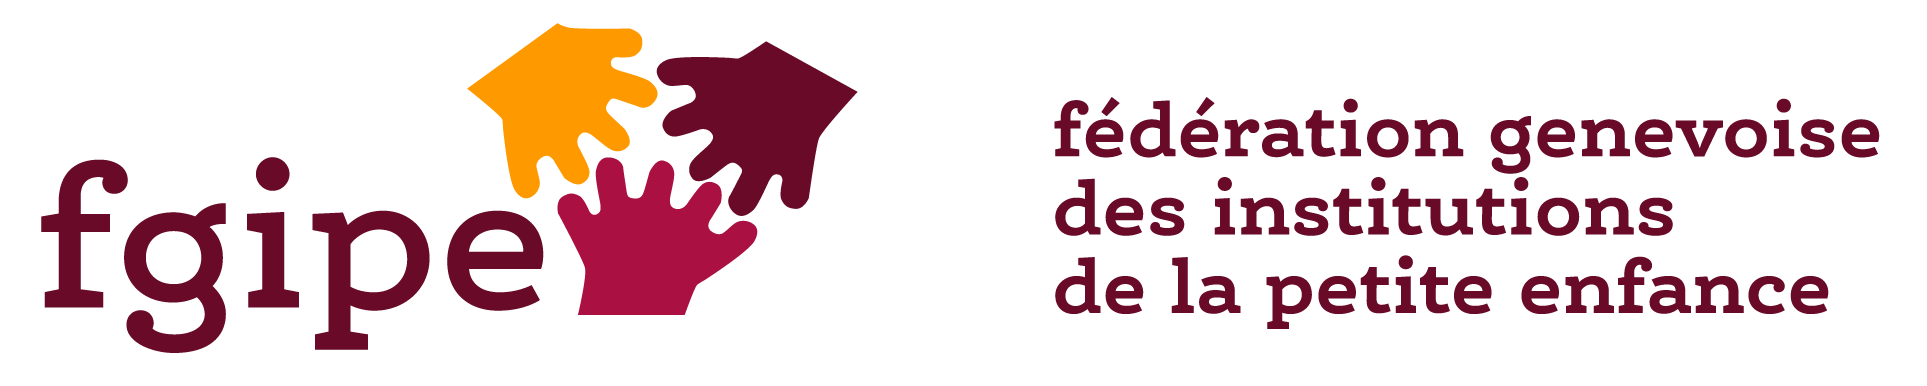 logo fgipe